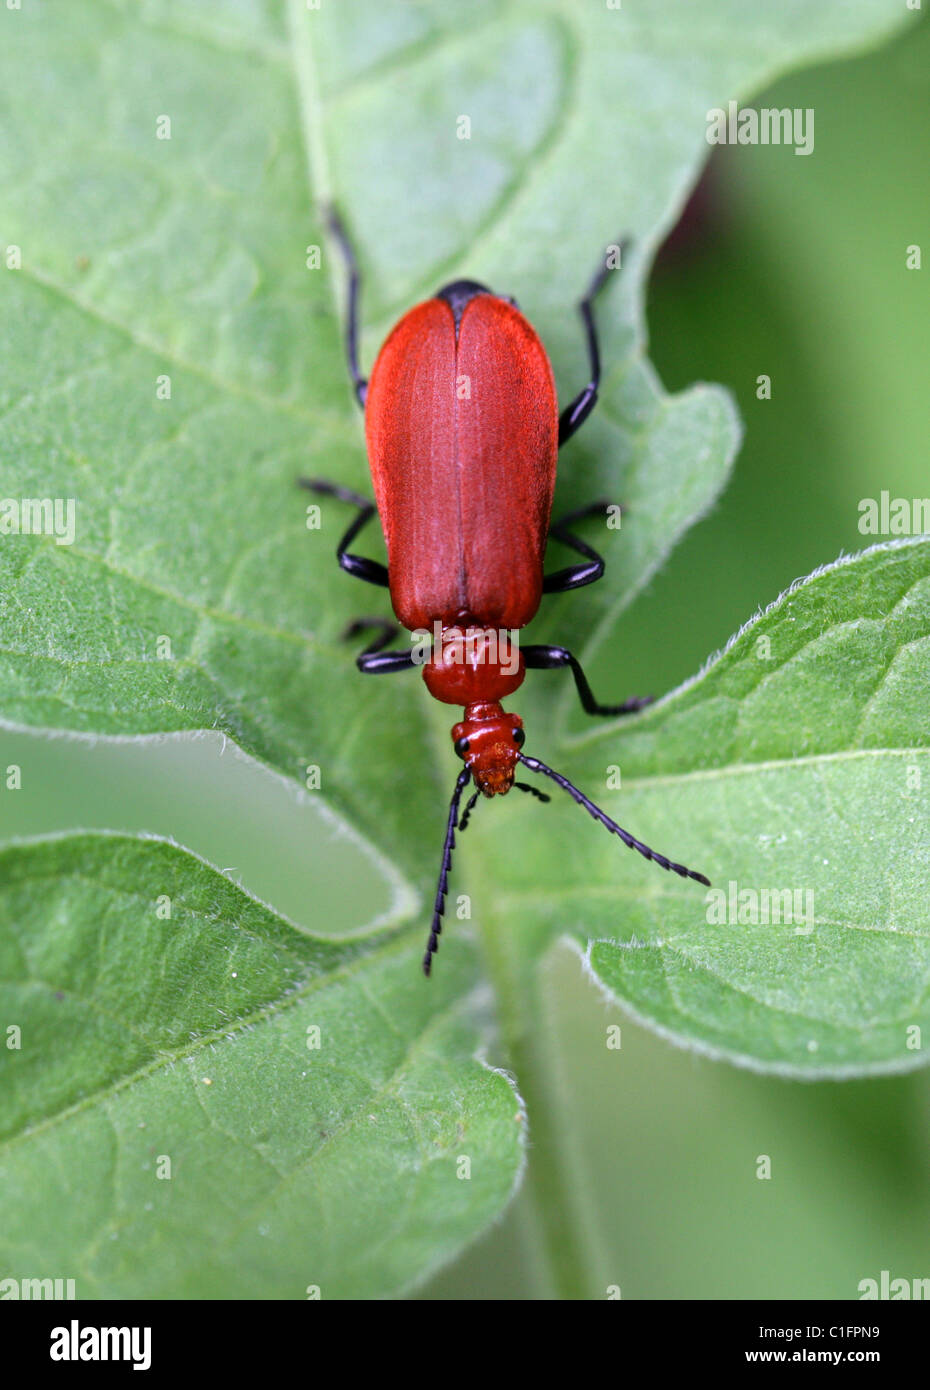 Rothaarige Kardinal Käfer, Pyrochroa Serraticornis Serraticornis, Pyrochroidae, Coleoptera. Stockfoto